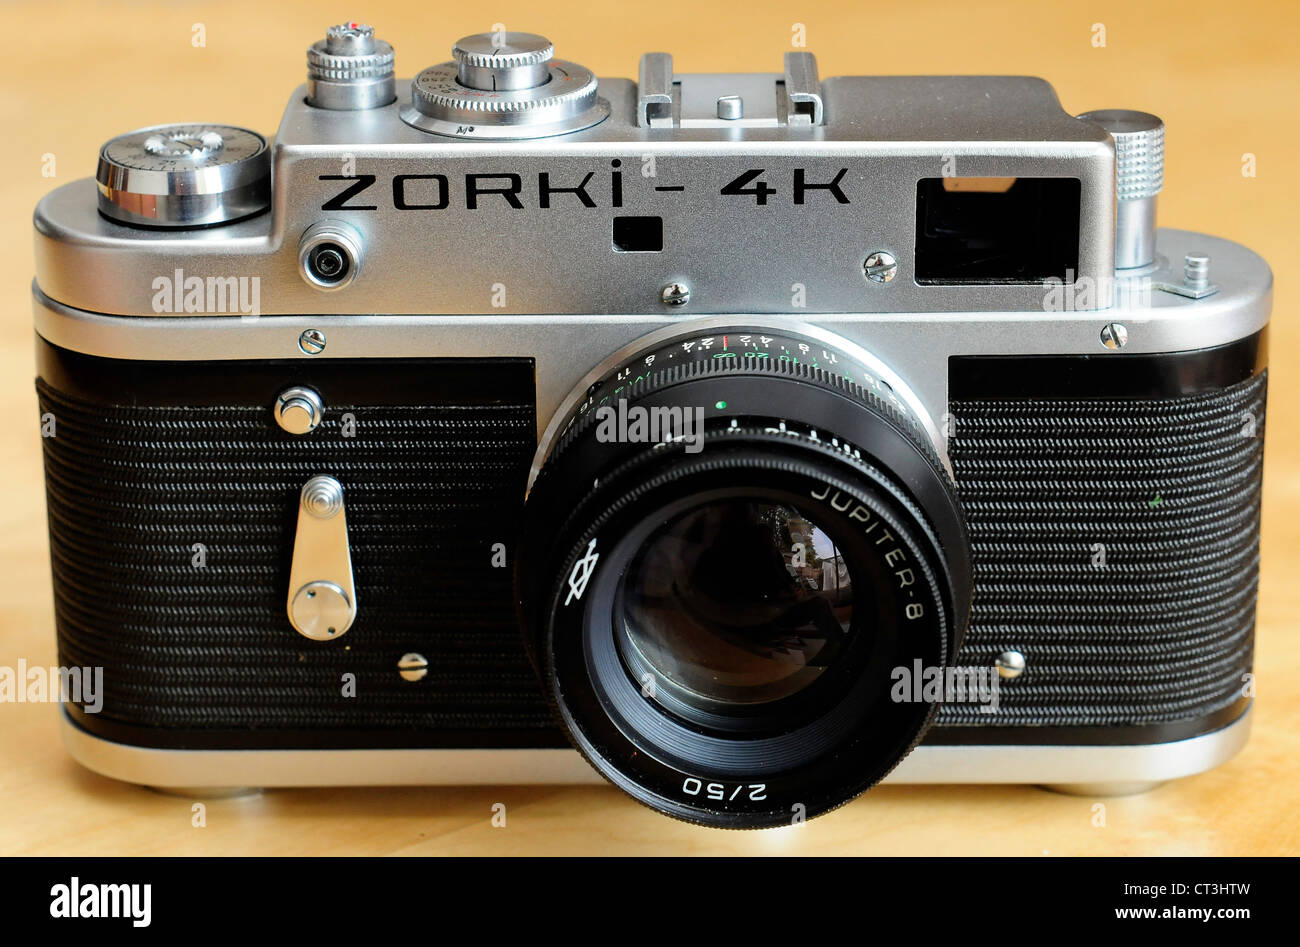 Russian camera 35MM rangefinder Zorki 4K Stock Photo